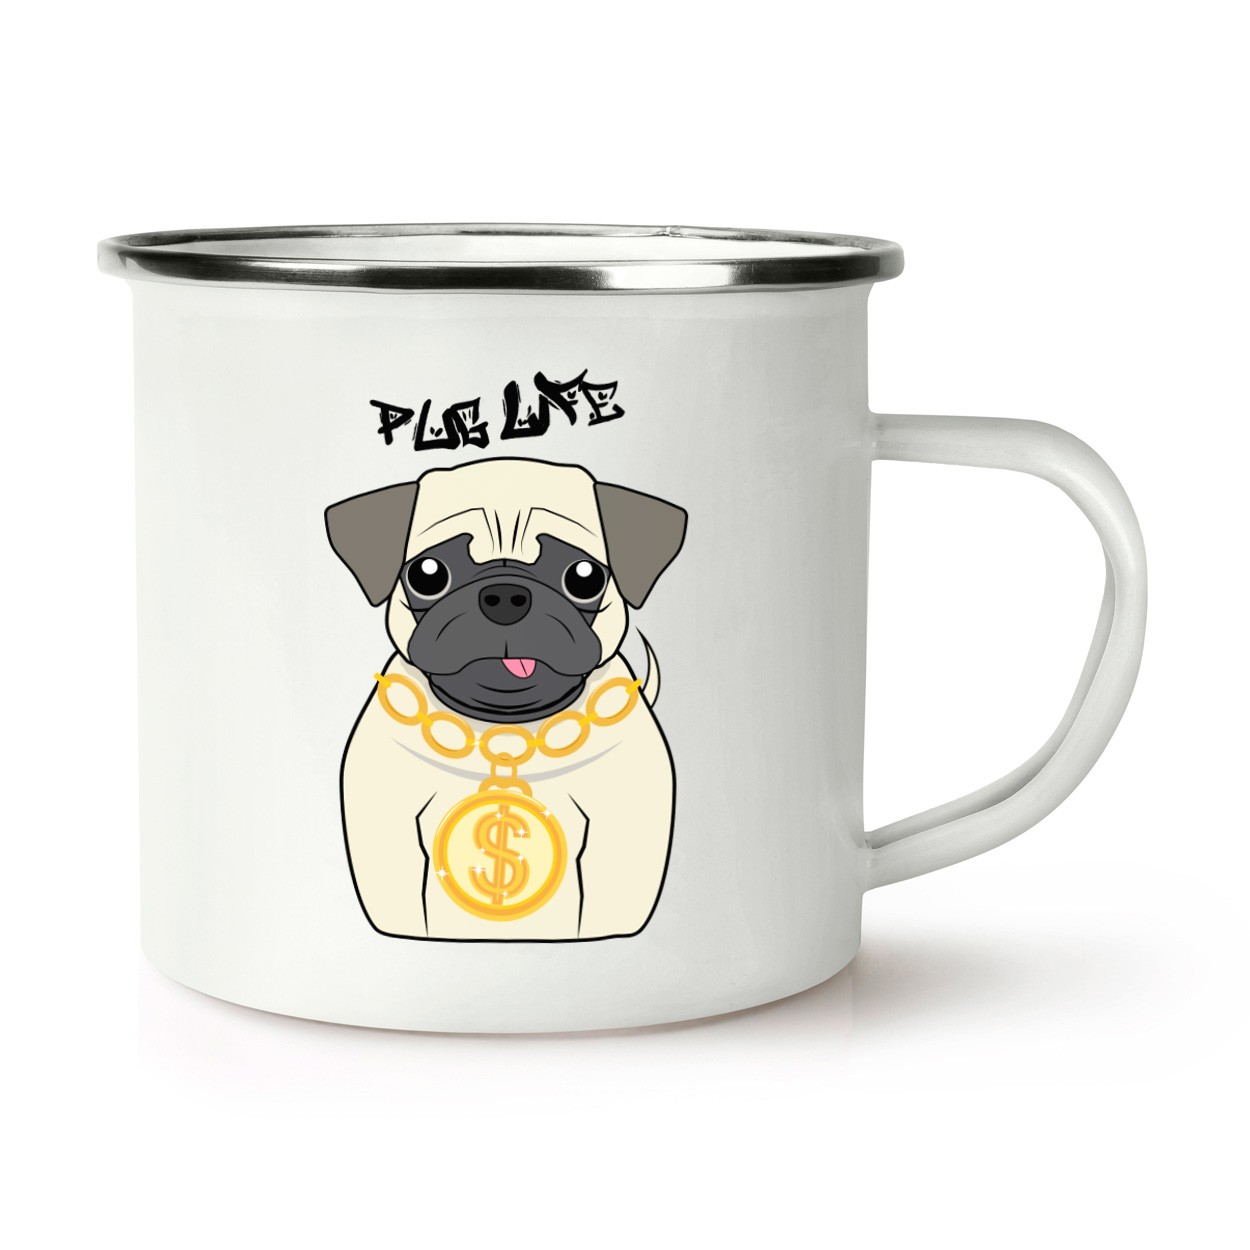 Pug Life Dog Retro Enamel Mug Cup